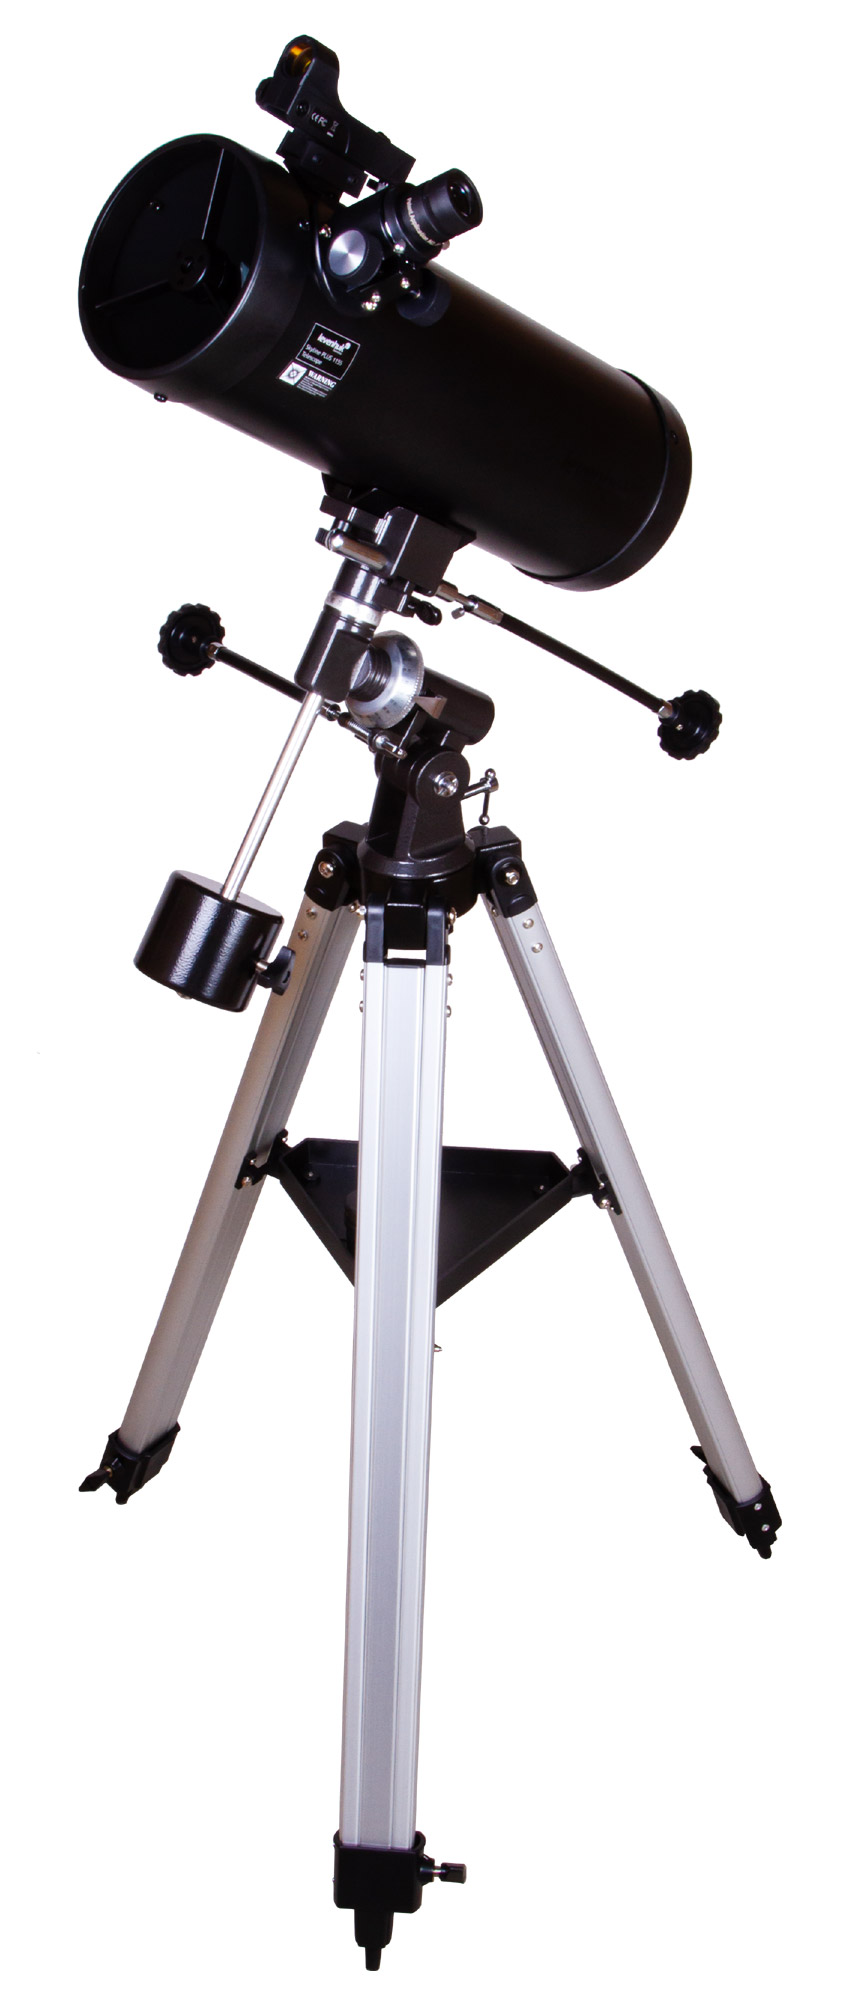 Levenhuk Skyline PLUS 115S teleszkóp